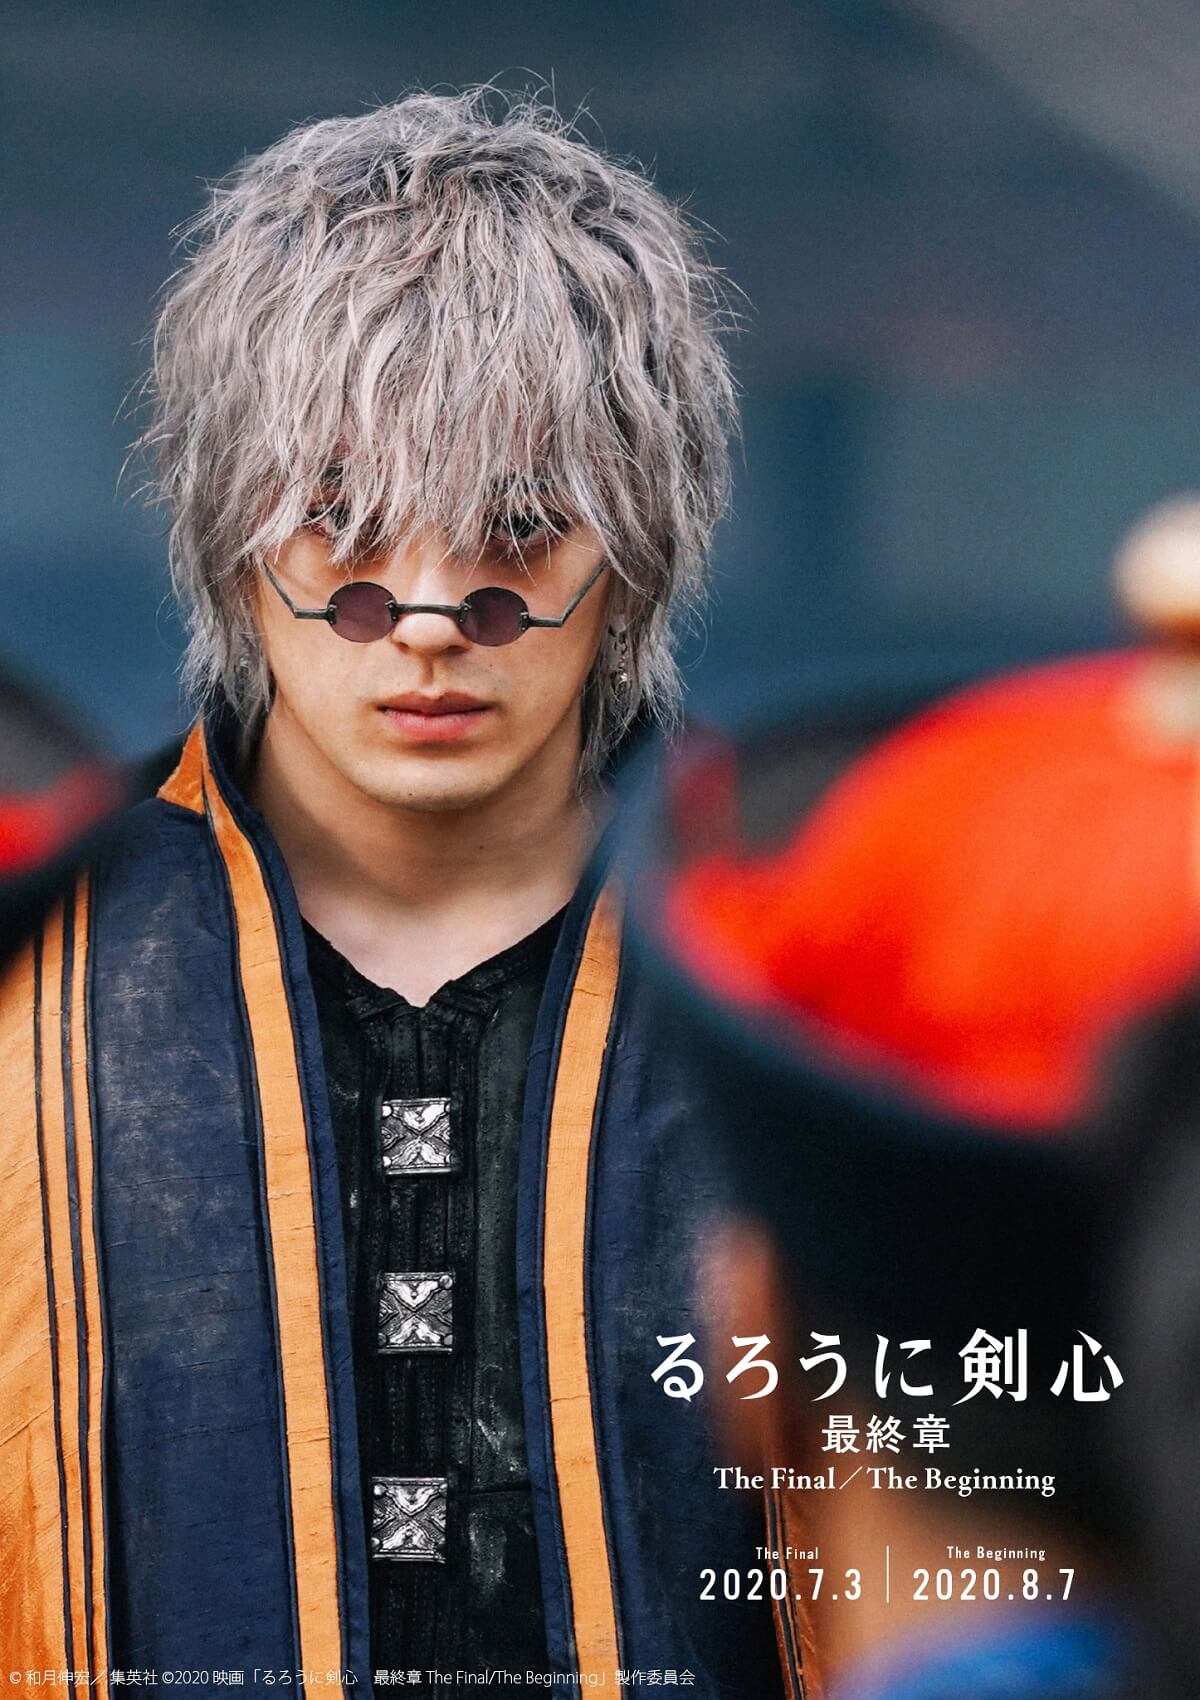 Rurouni Kenshin Releases 4th Trailer, Reveals Worldwide Screening Plans